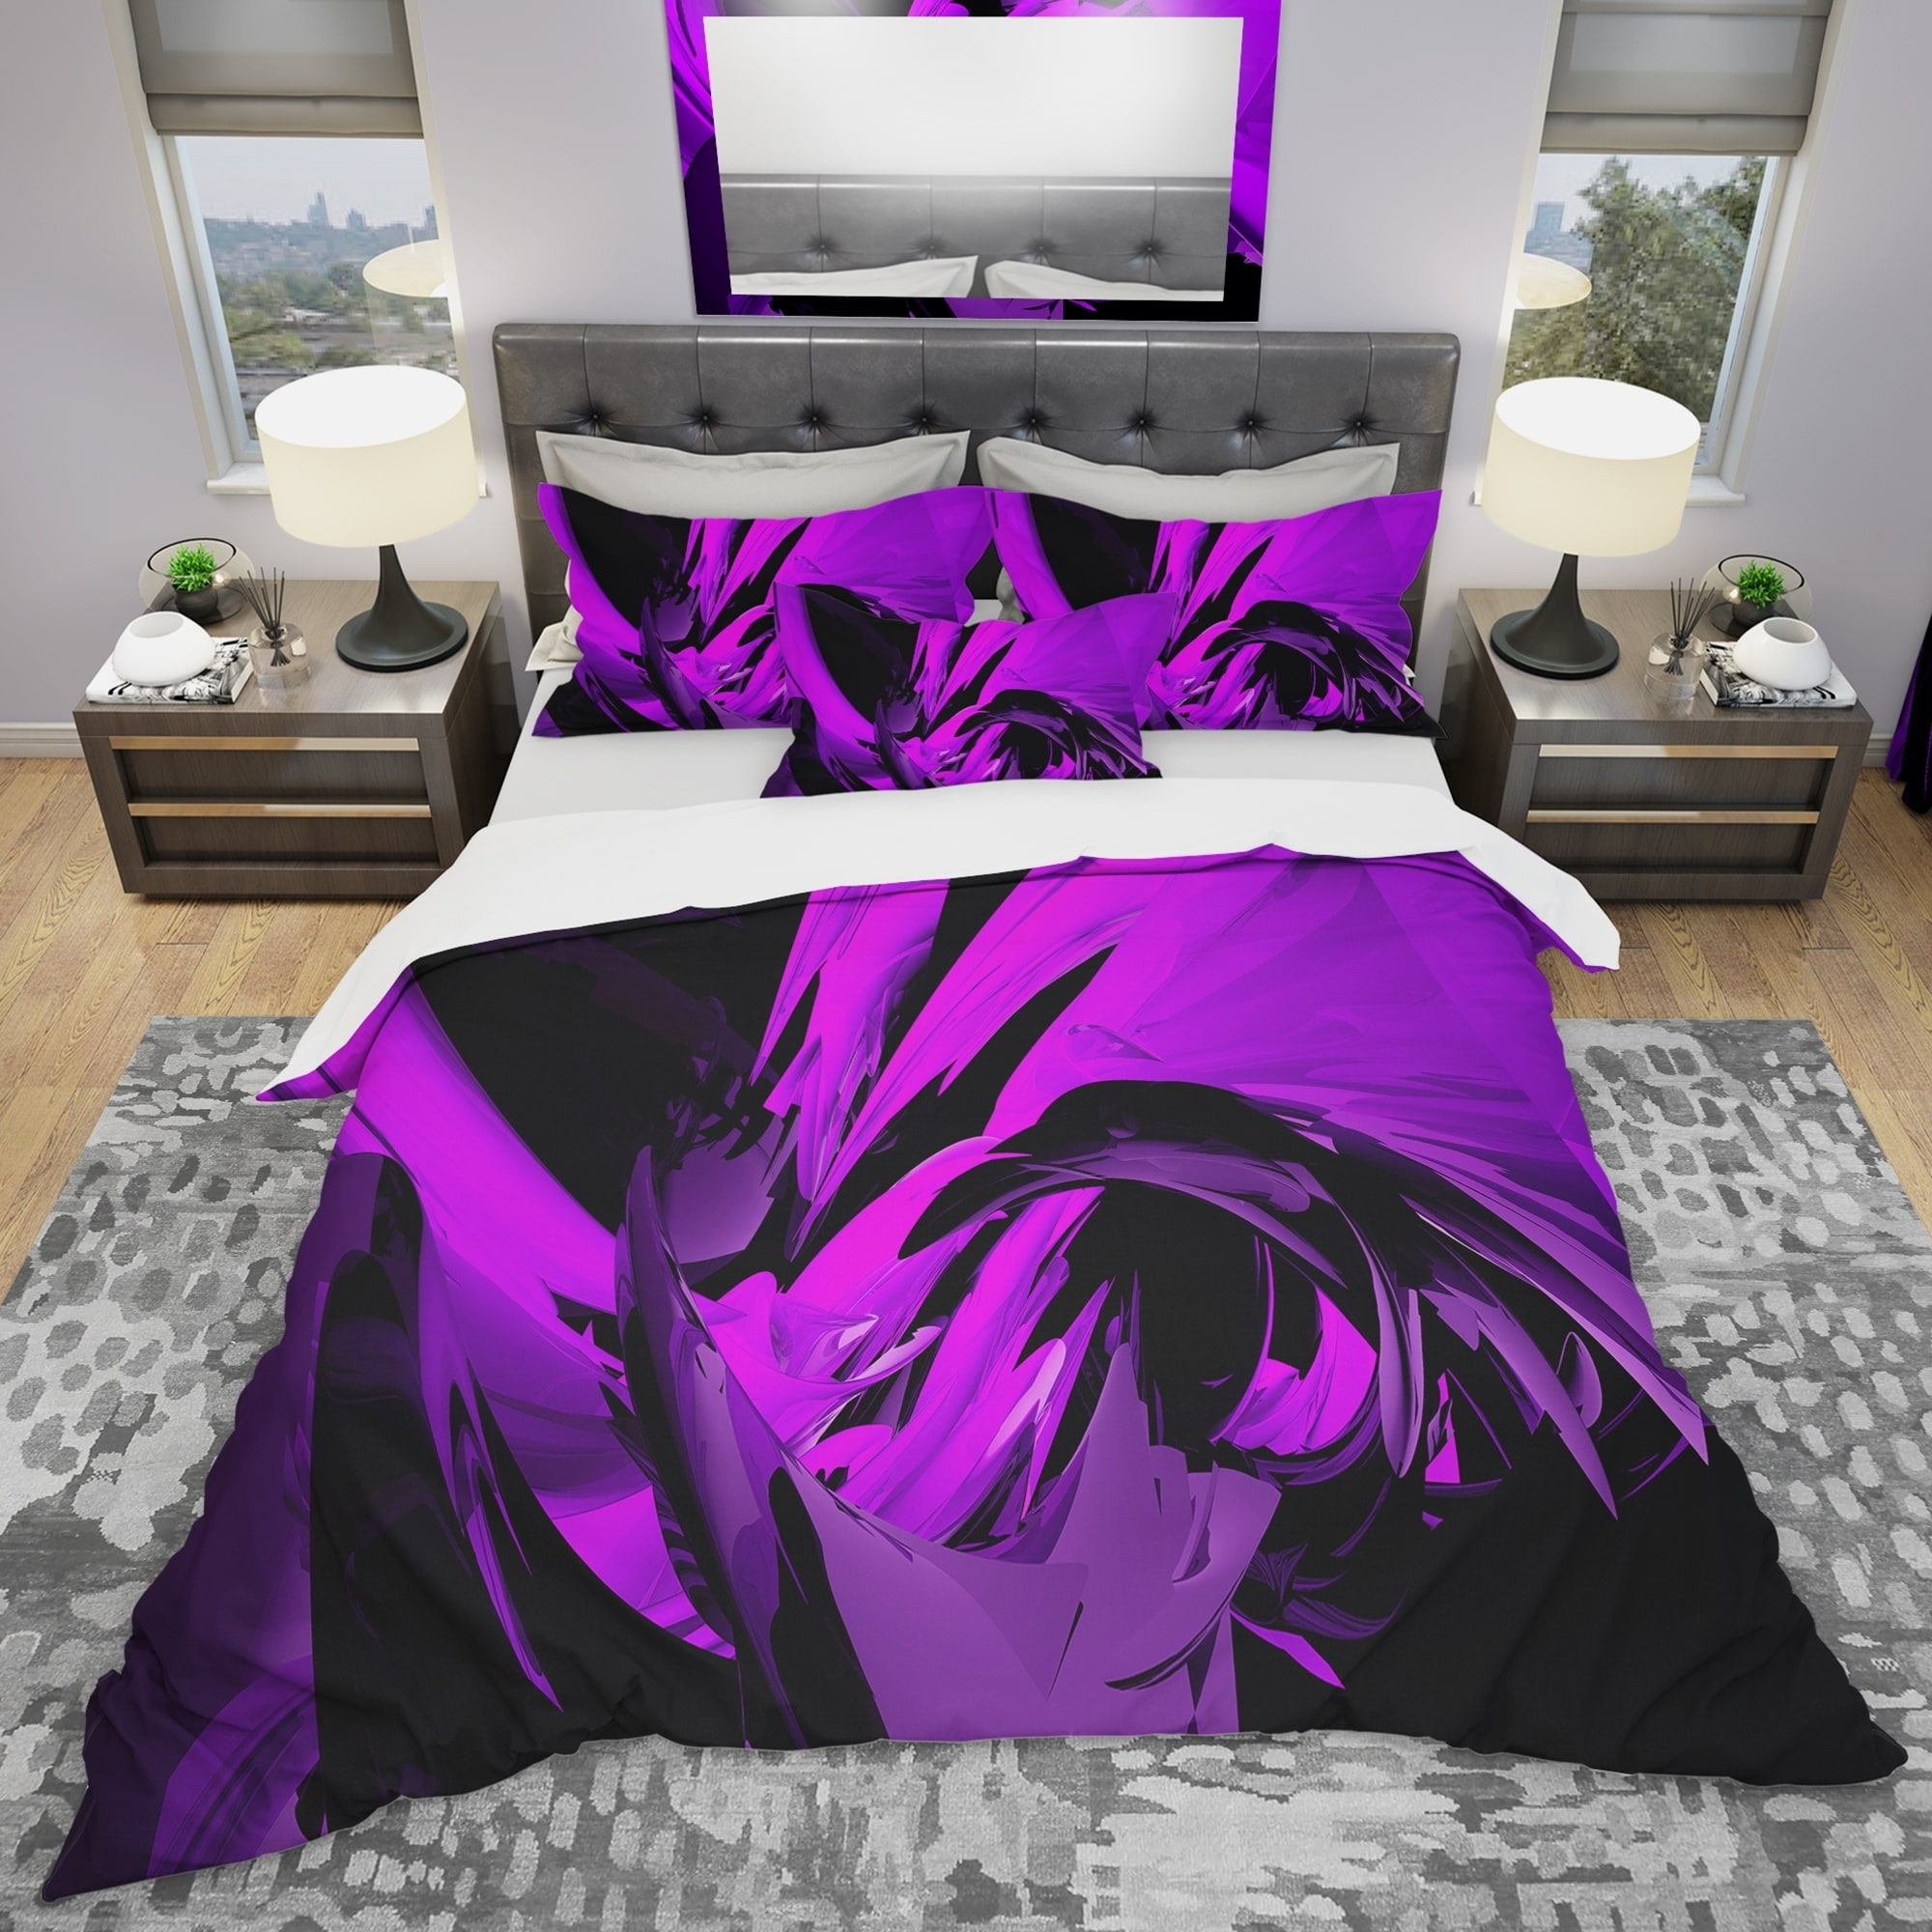 purple bedding sets